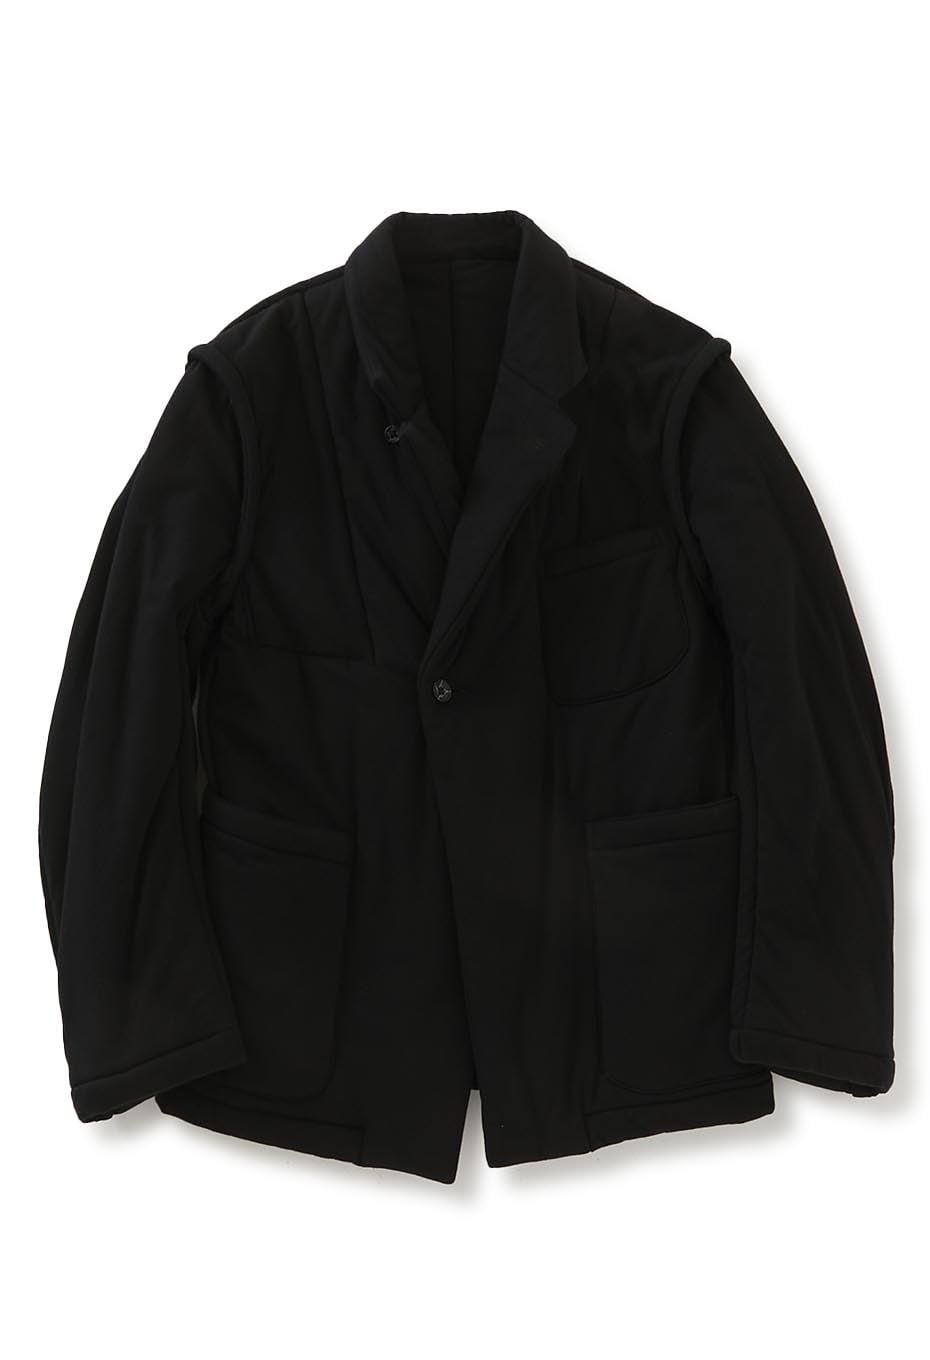 KOZABURO Insulated jersey semi-double unlined jacket